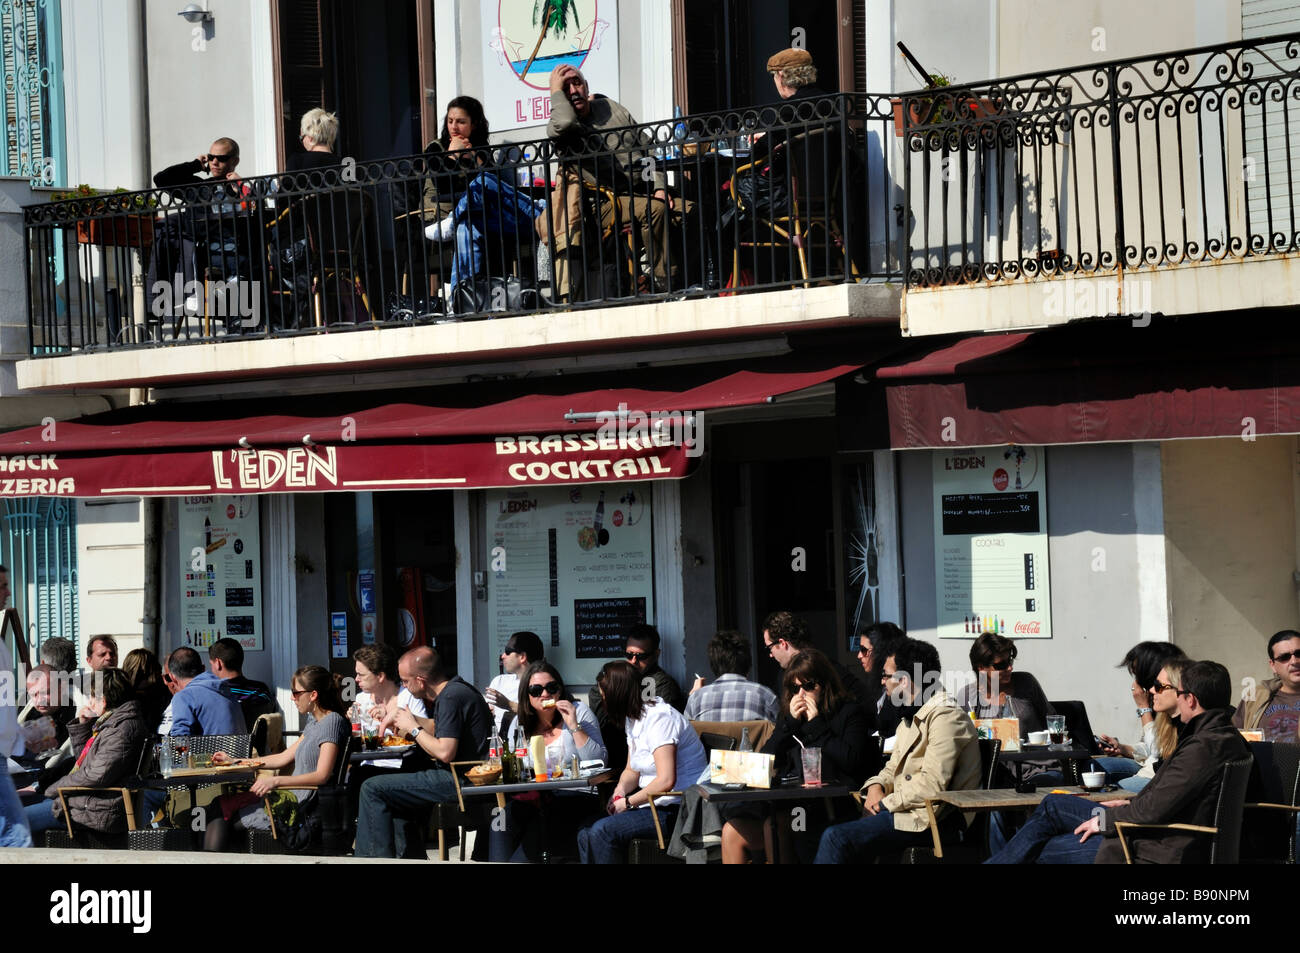 Niza Francia, Francés Cafe Restaurante Brasserie, Acera, atestada terraza en Quai des Etats Unis' 'L'Eden Pizzeria' Foto de stock